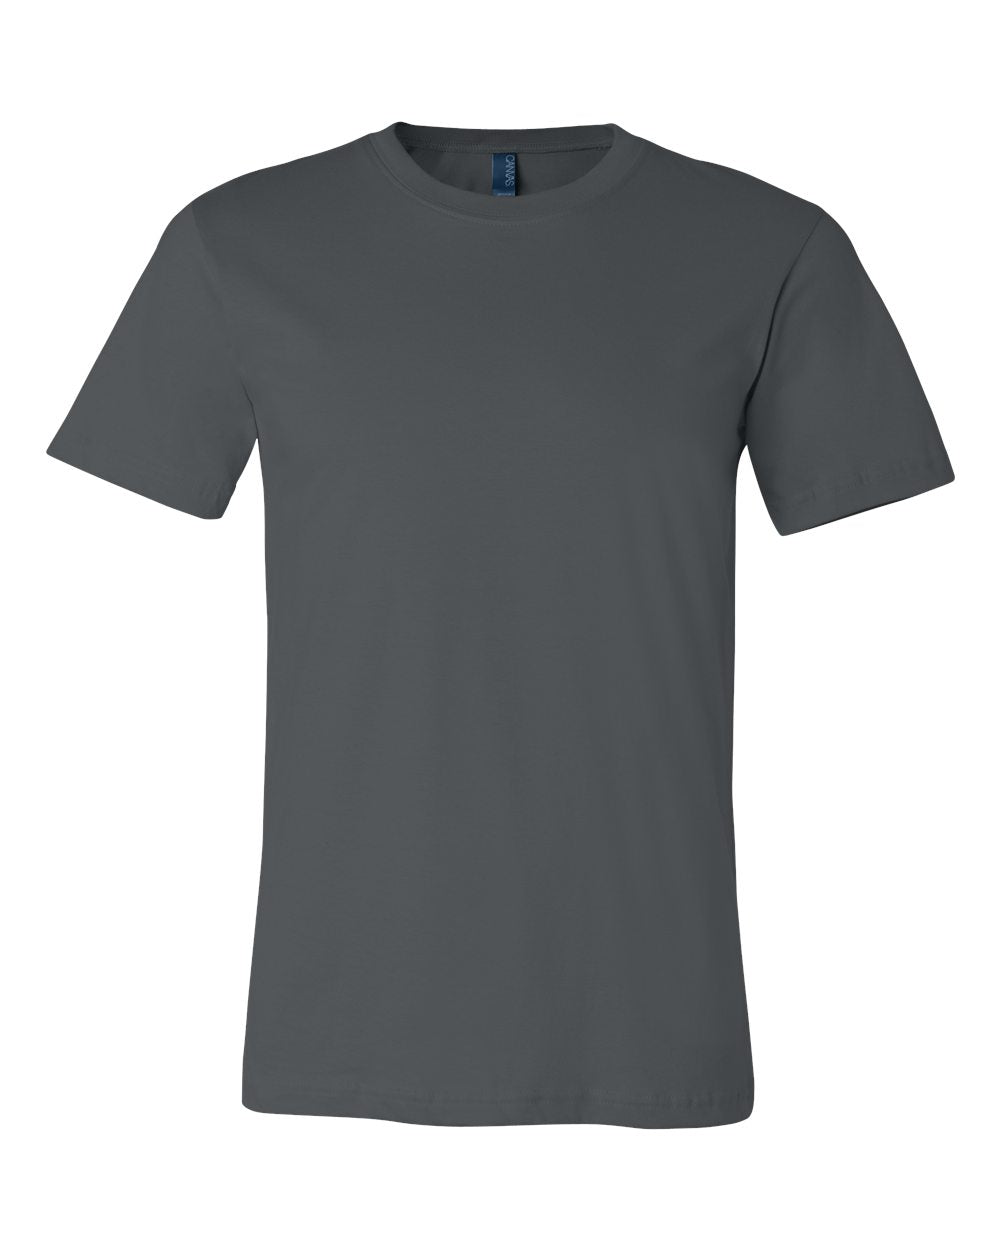 BELLA + CANVAS - Unisex Jersey Tee - 3001 - Budget Promotion T-shirt CA$ 10.96 Asphalt